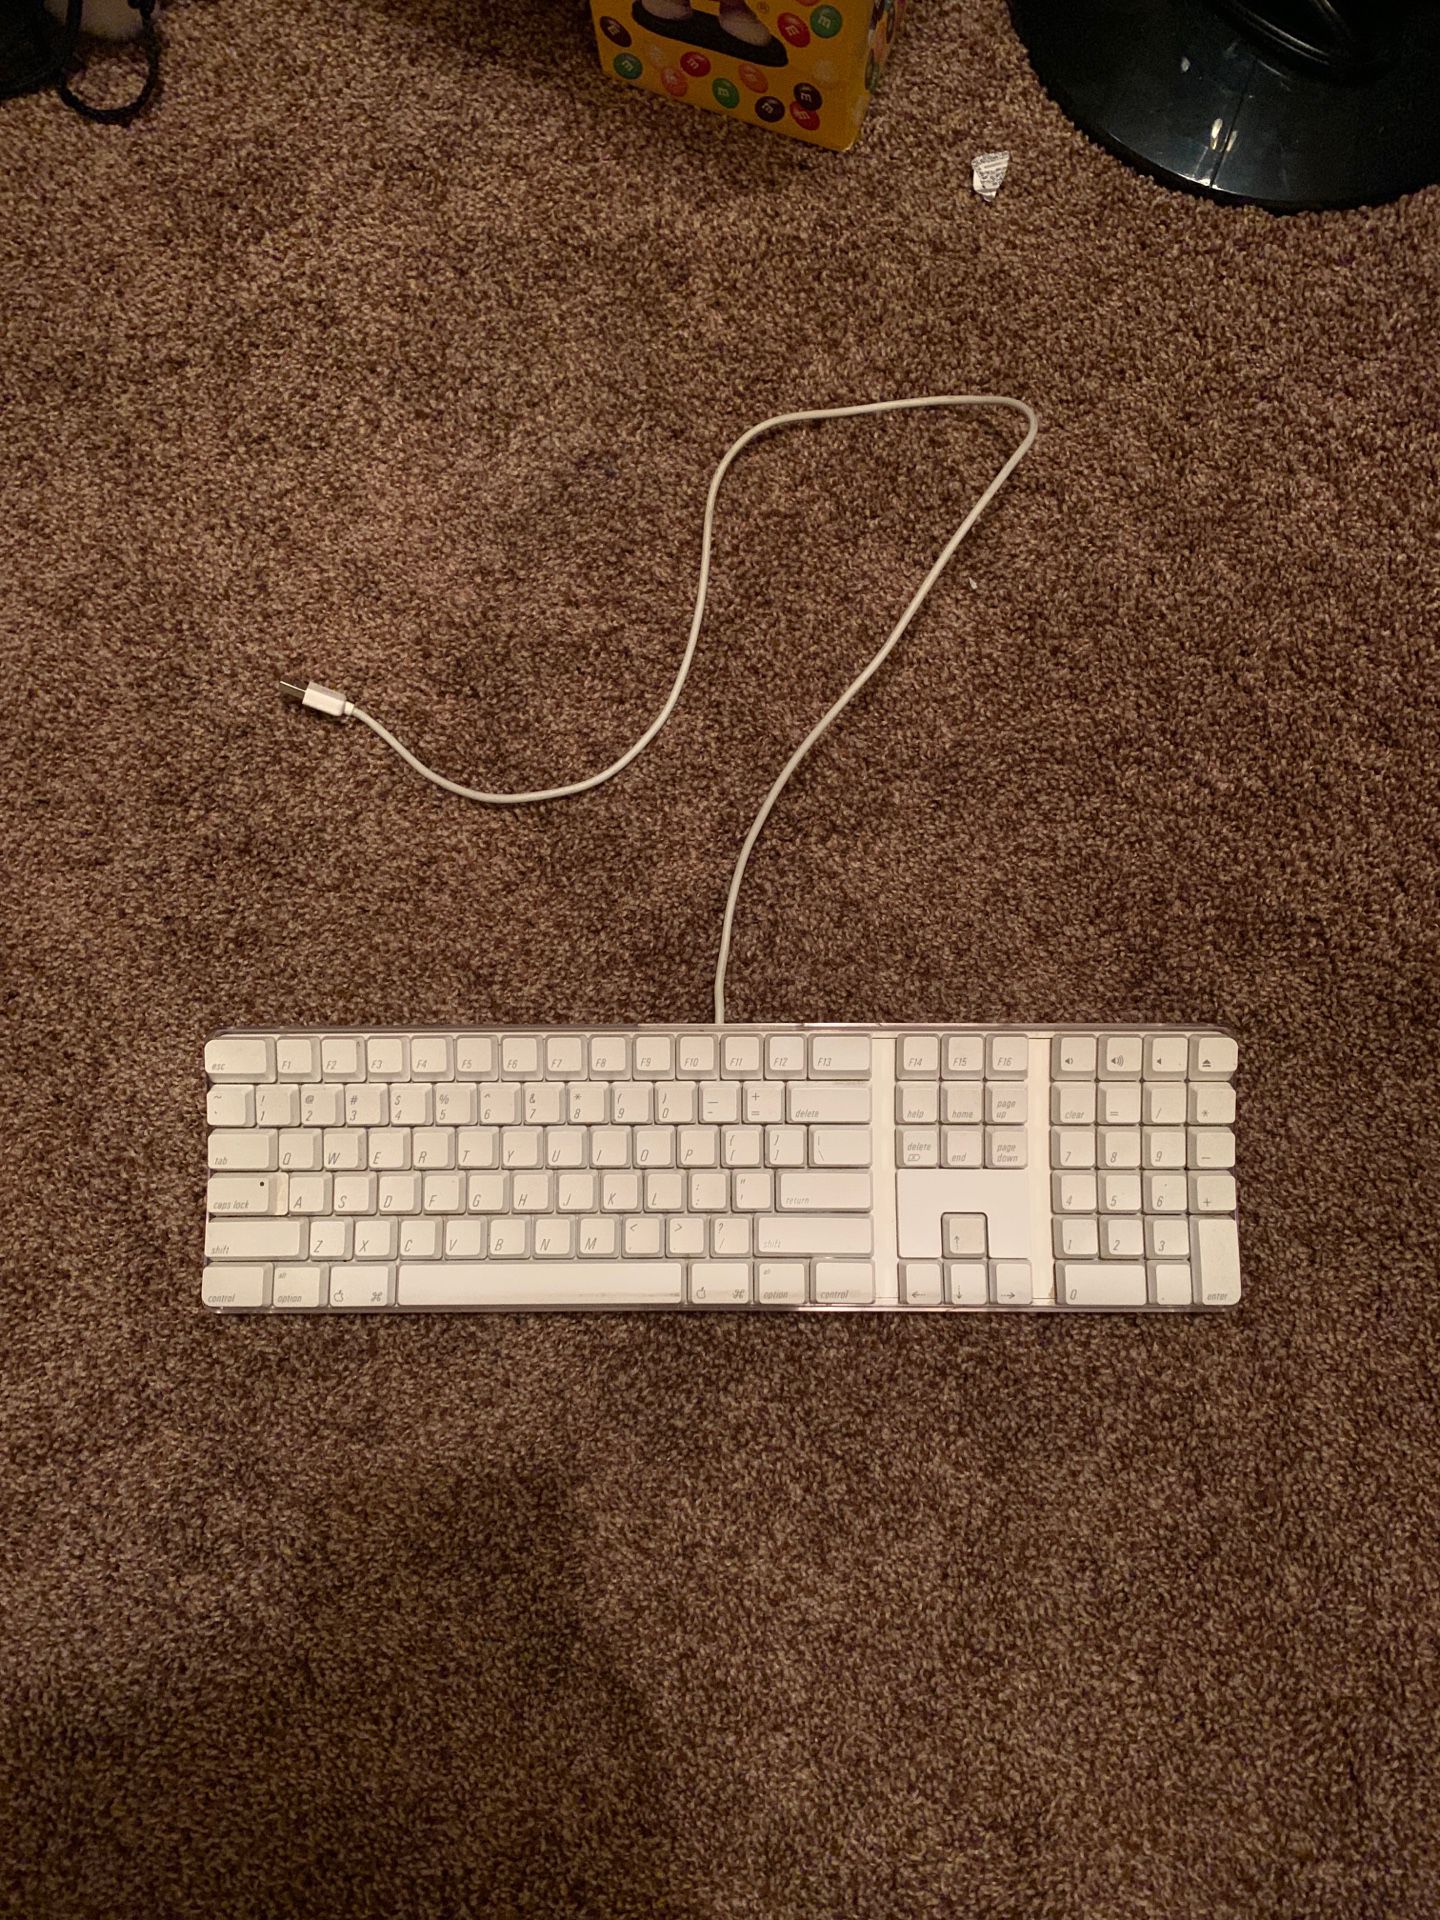 Mac Apple Computer keyboard with 2 USB ports